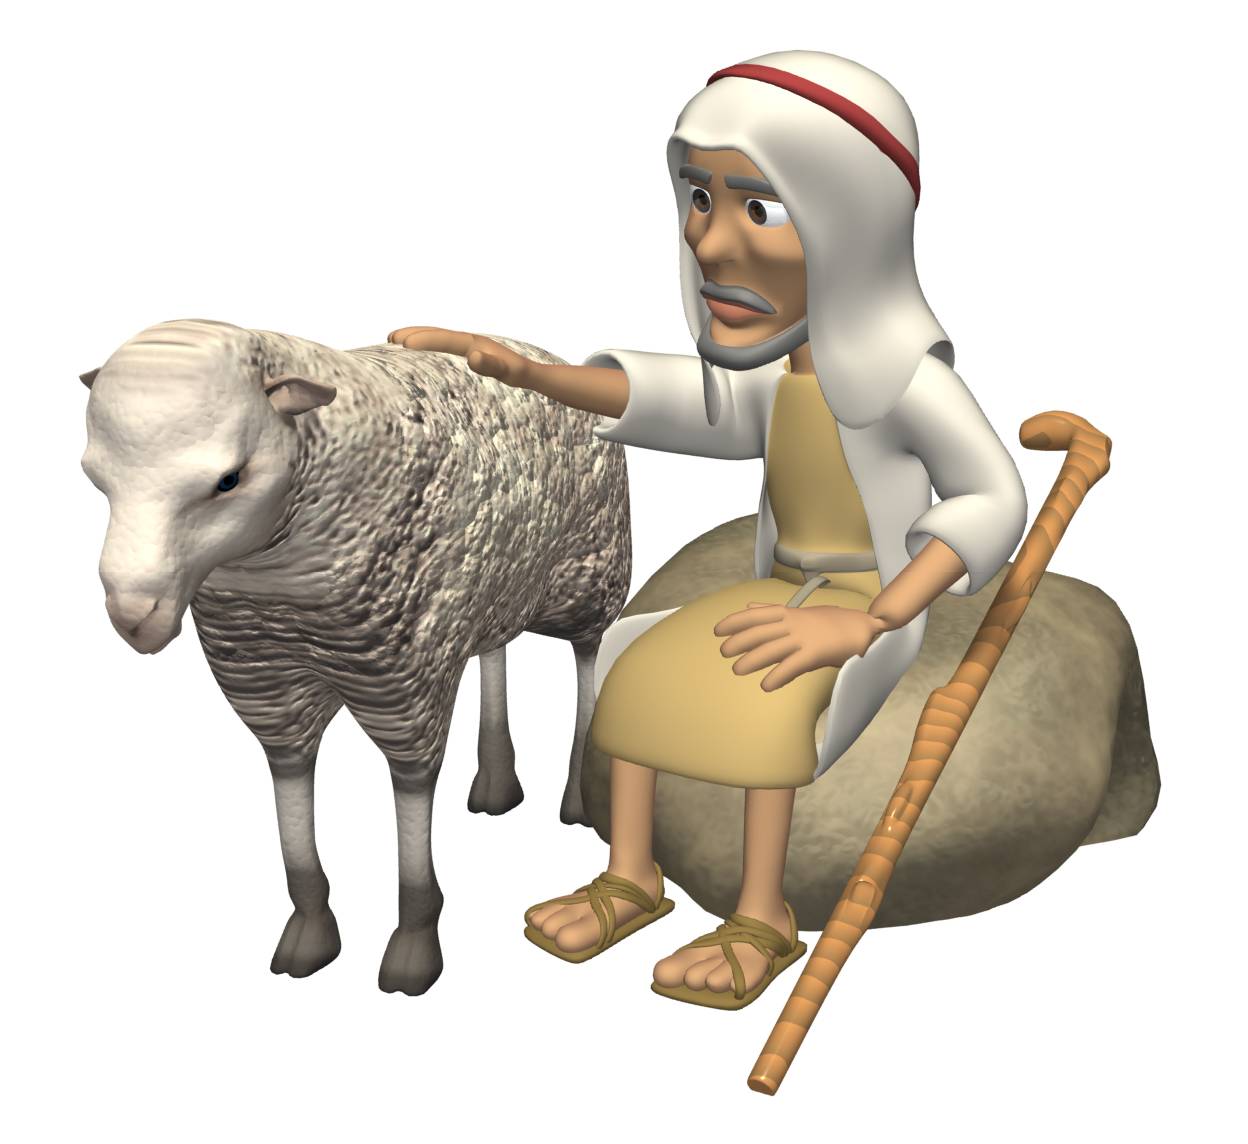 Psalm of a Discouraged Shepherd | Hoshana Rabbah BlogHoshana Rabbah Blog